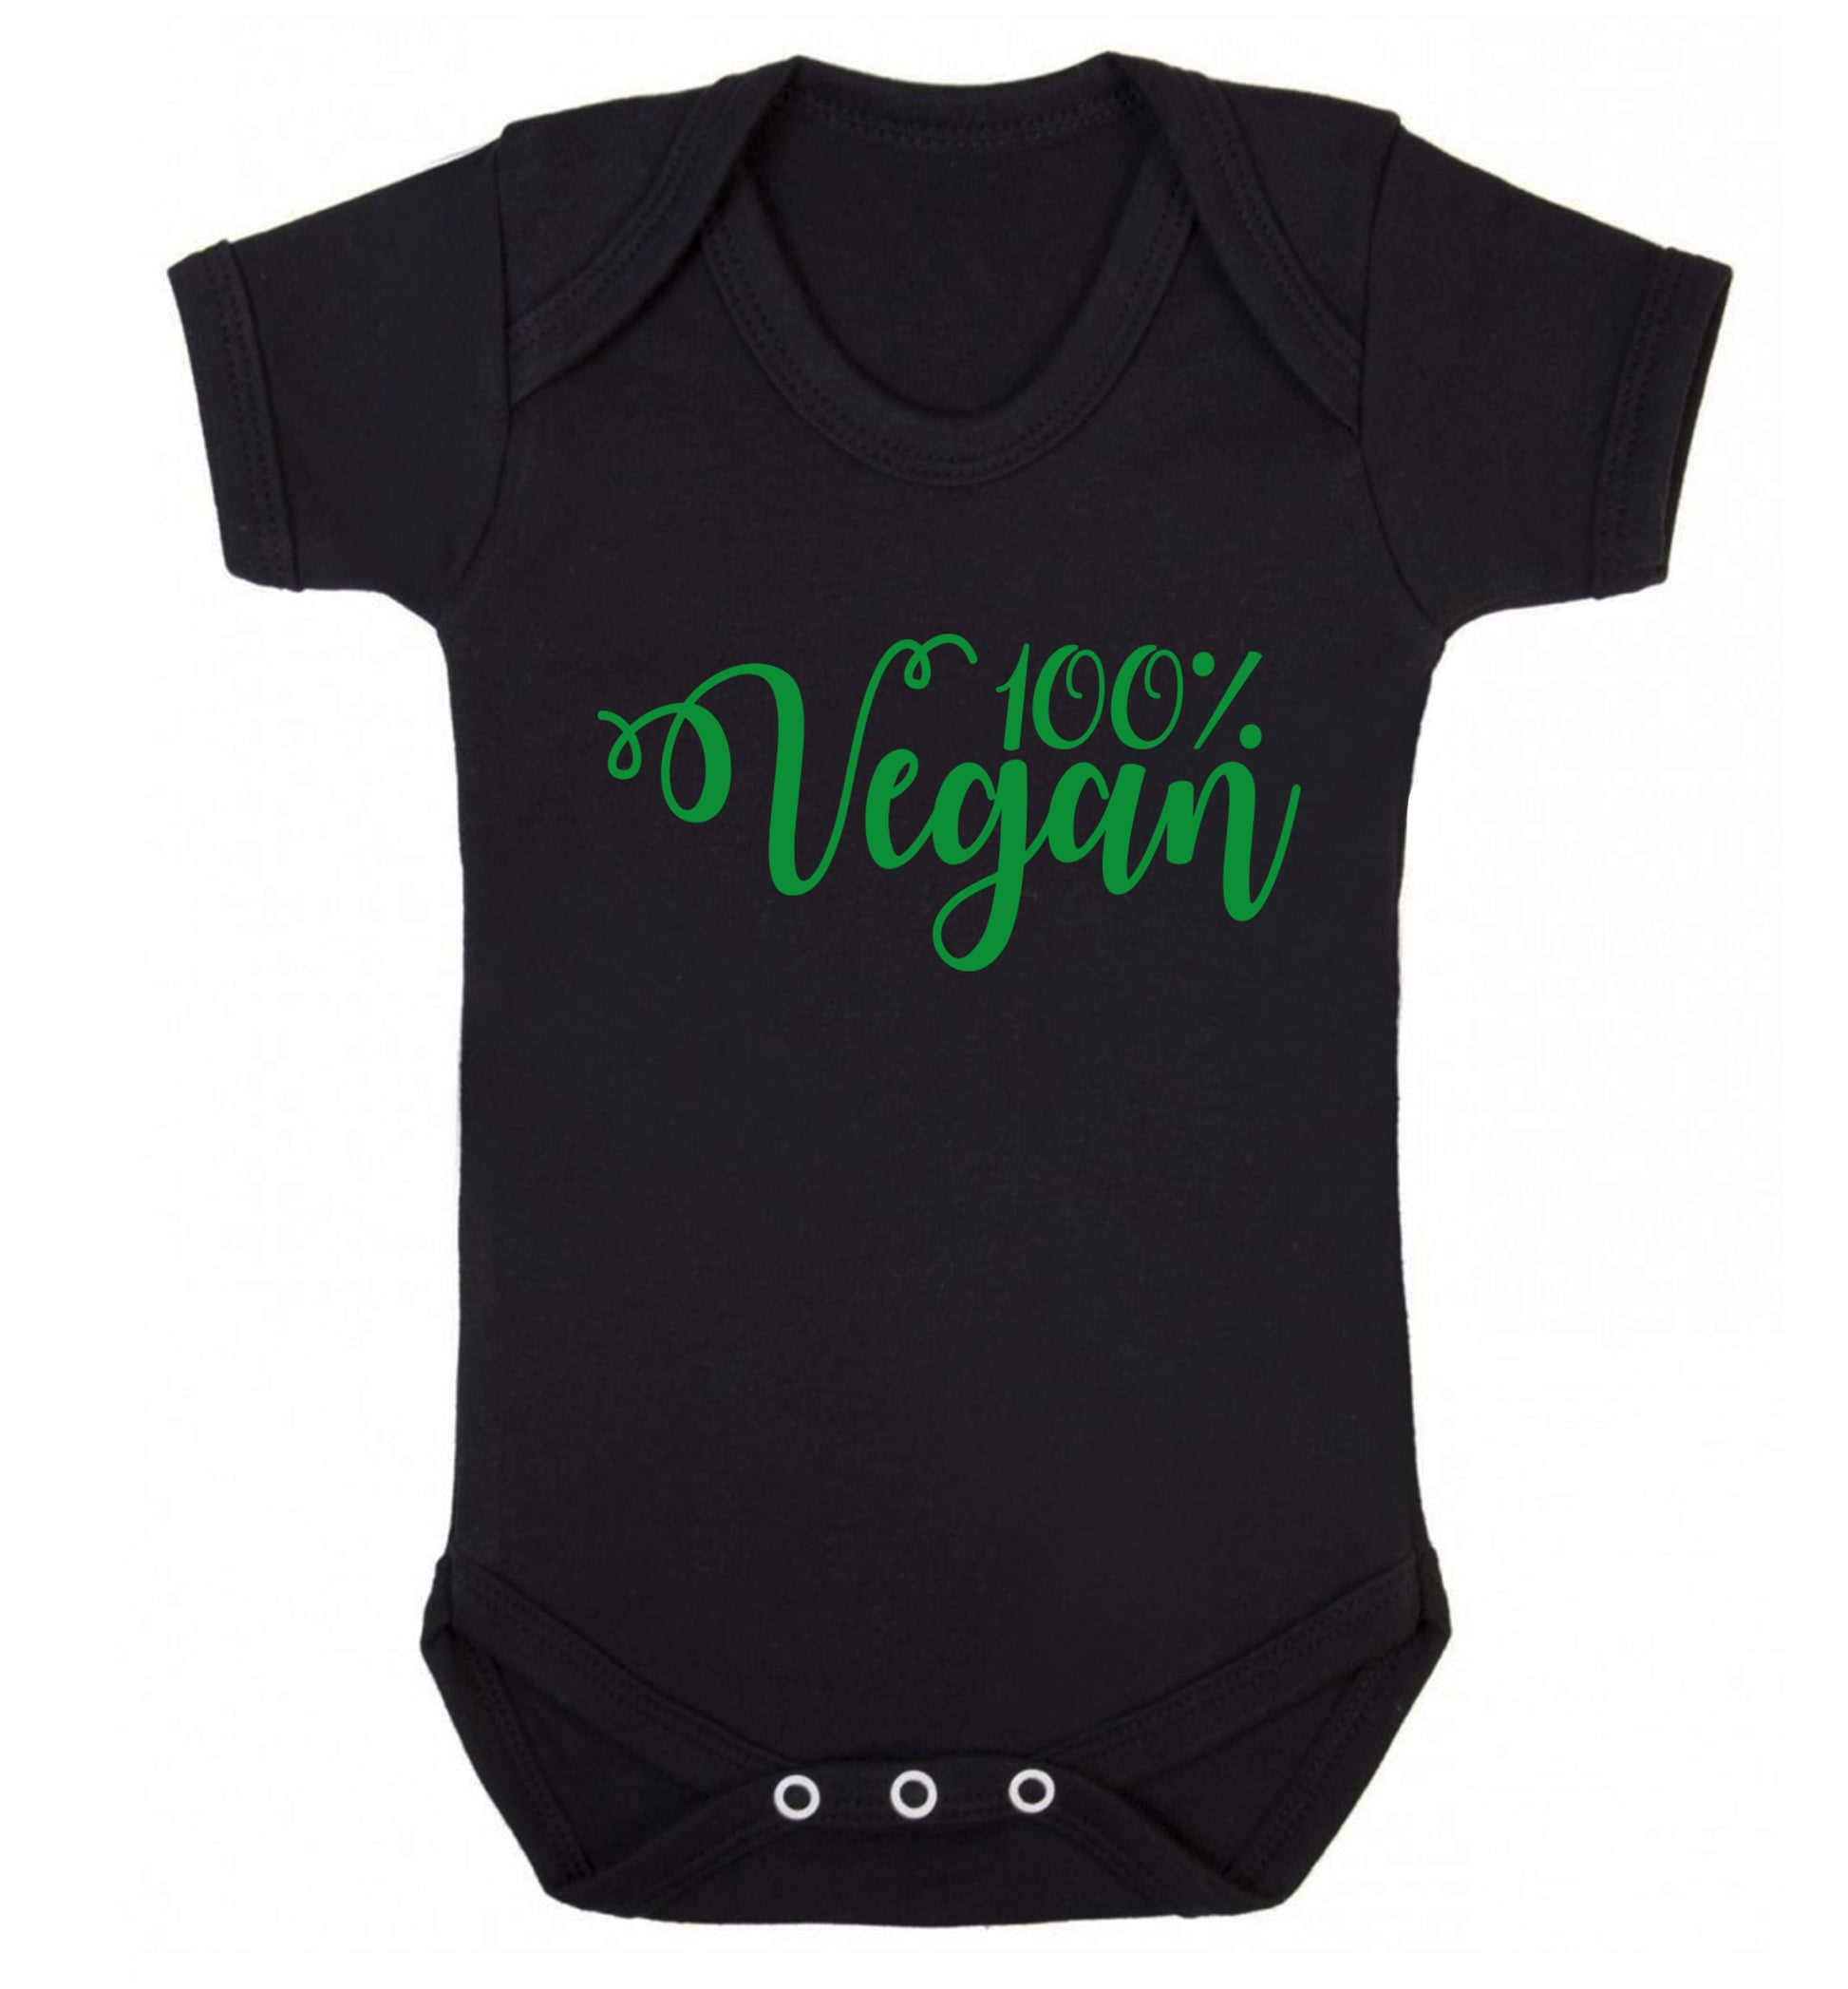 100% Vegan Baby Vest black 18-24 months